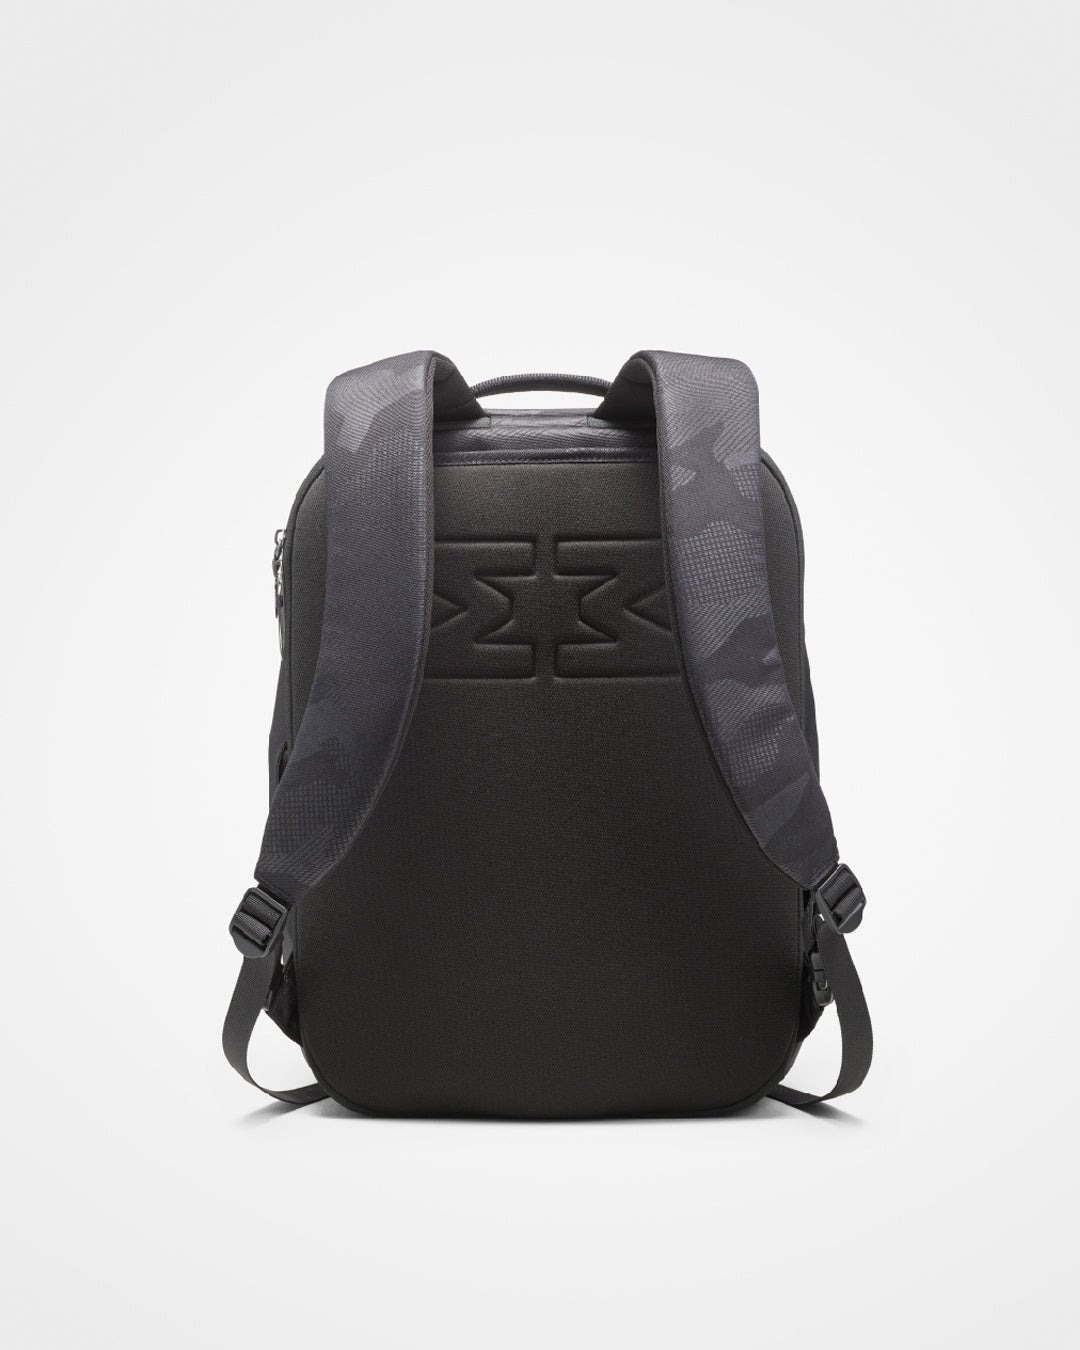 MiniMeis G5 Multipurpose Travel Backpack - Black - Neo Essentials Store